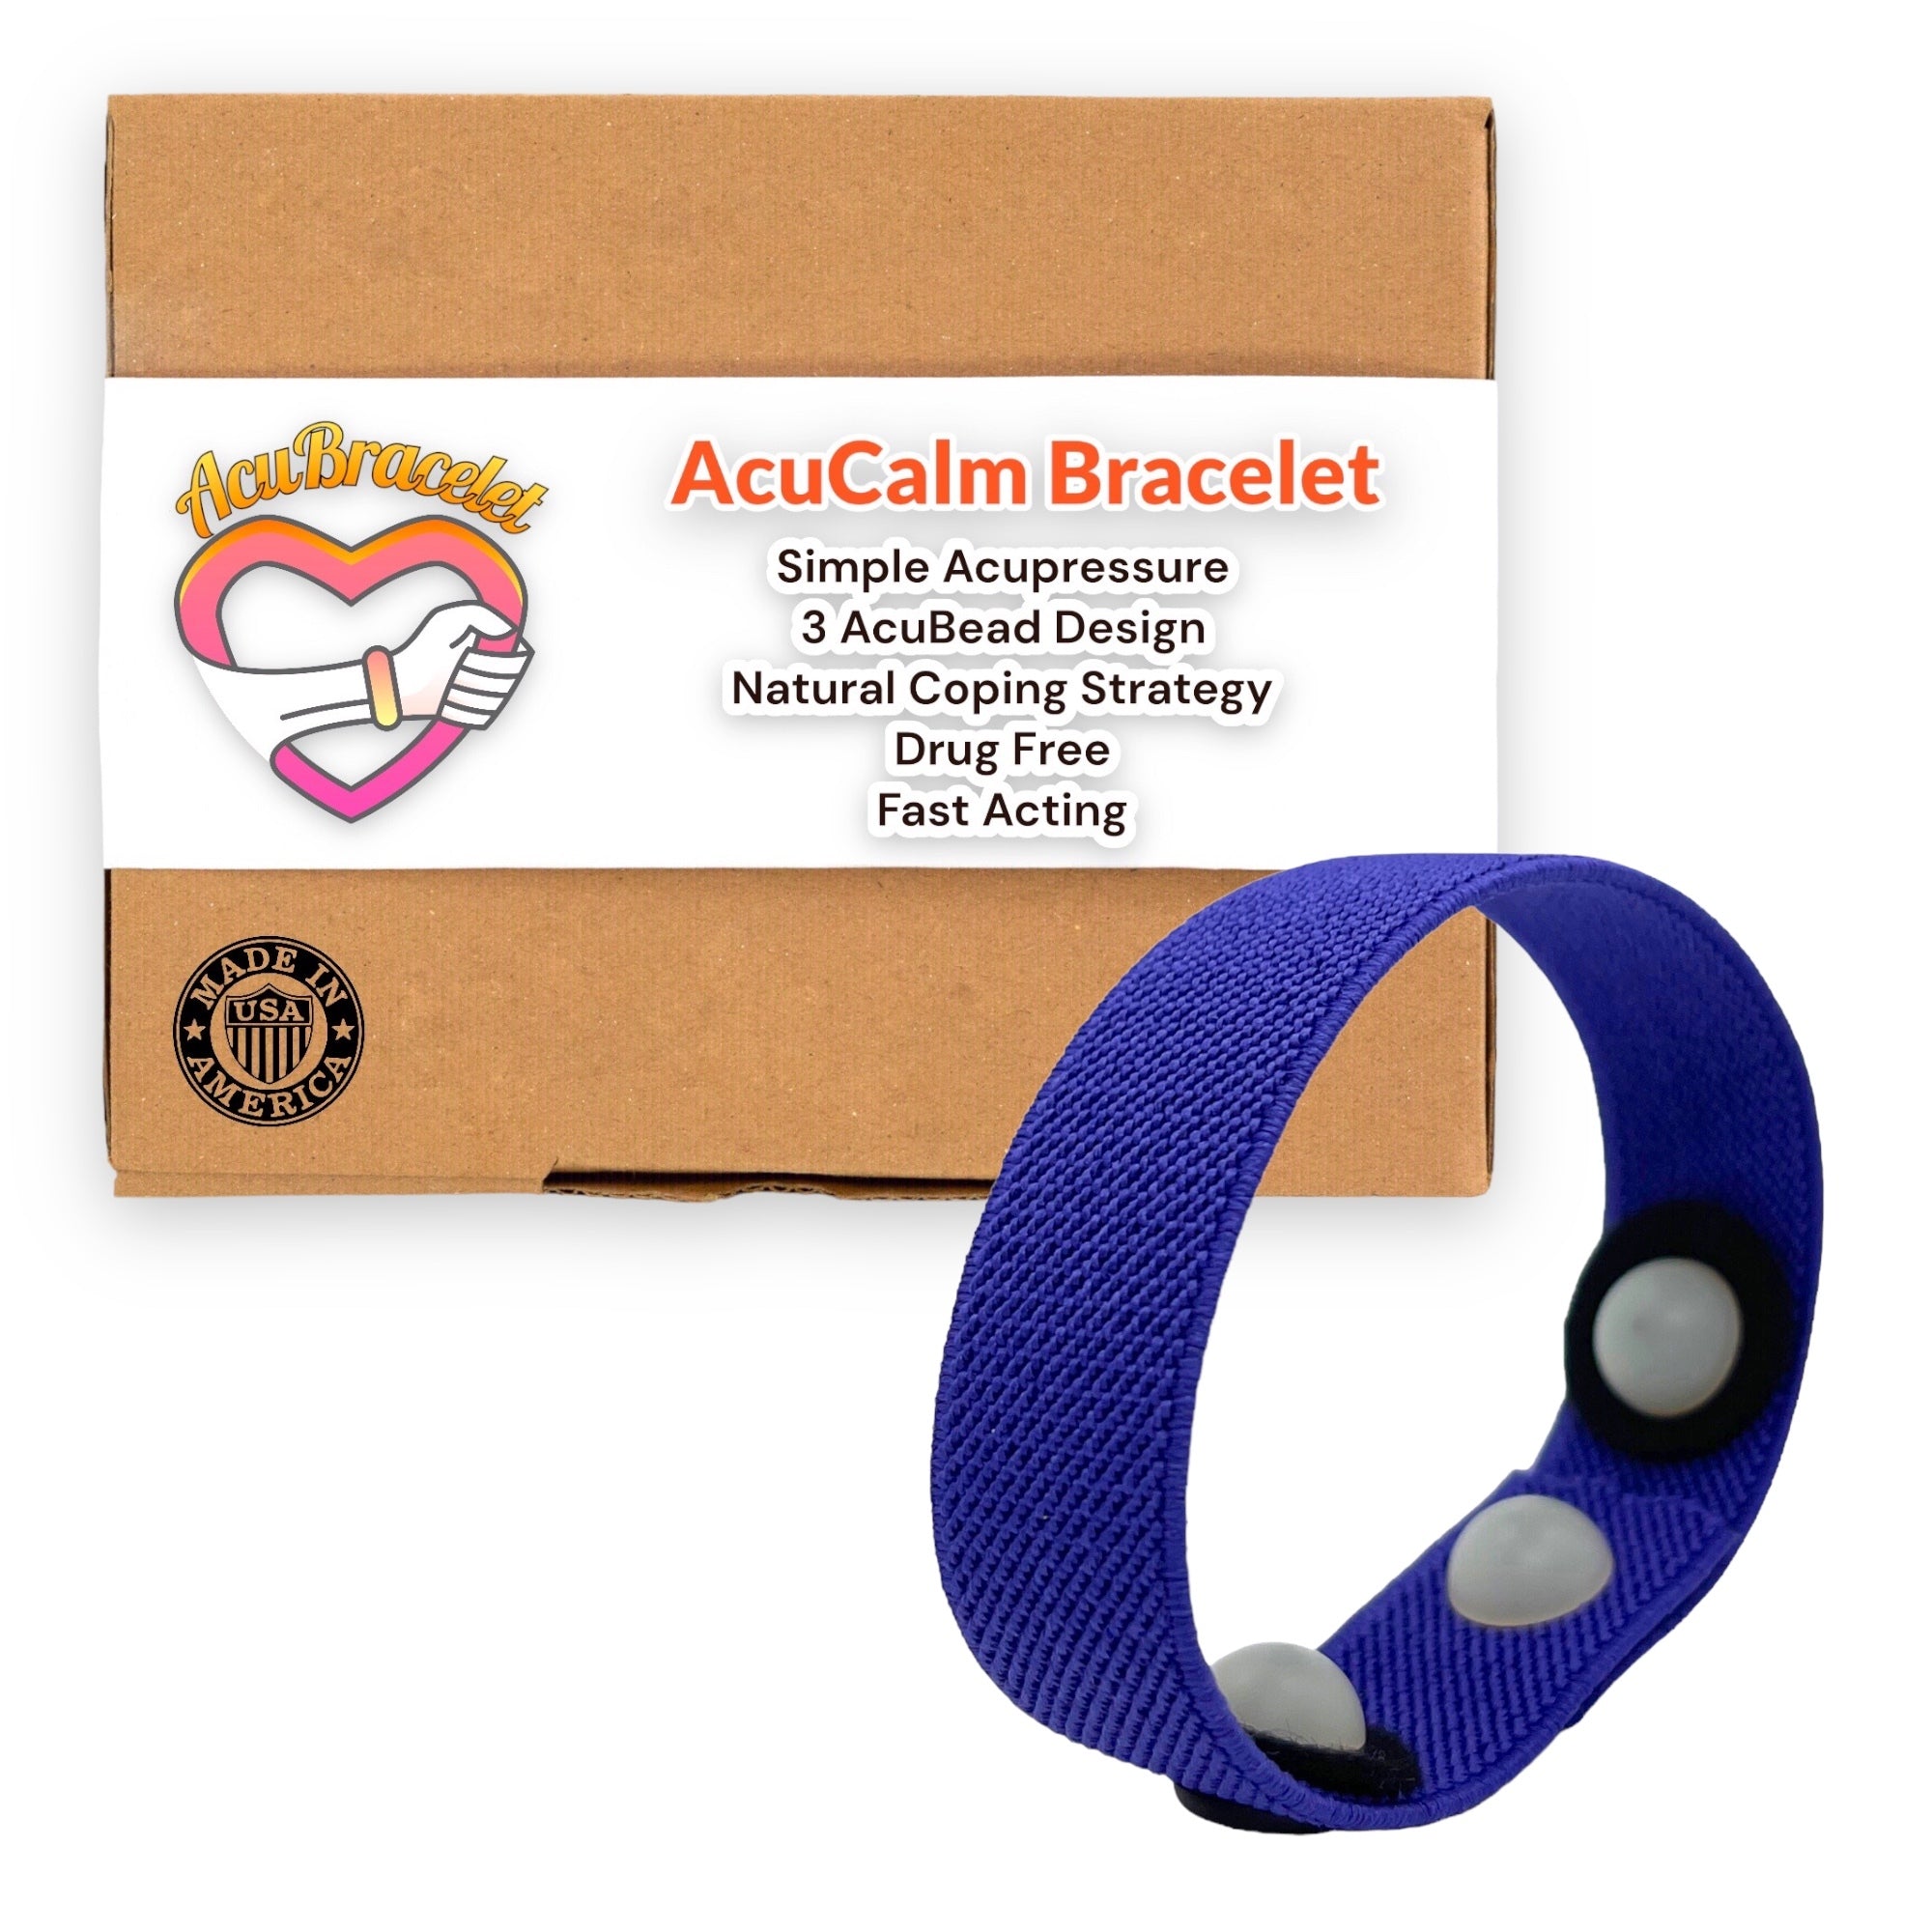 anxiety relief multi symptom acupressure bracelet natural sleep aid mood support emotional balance 3 acubead slip on design panic attacks 915542